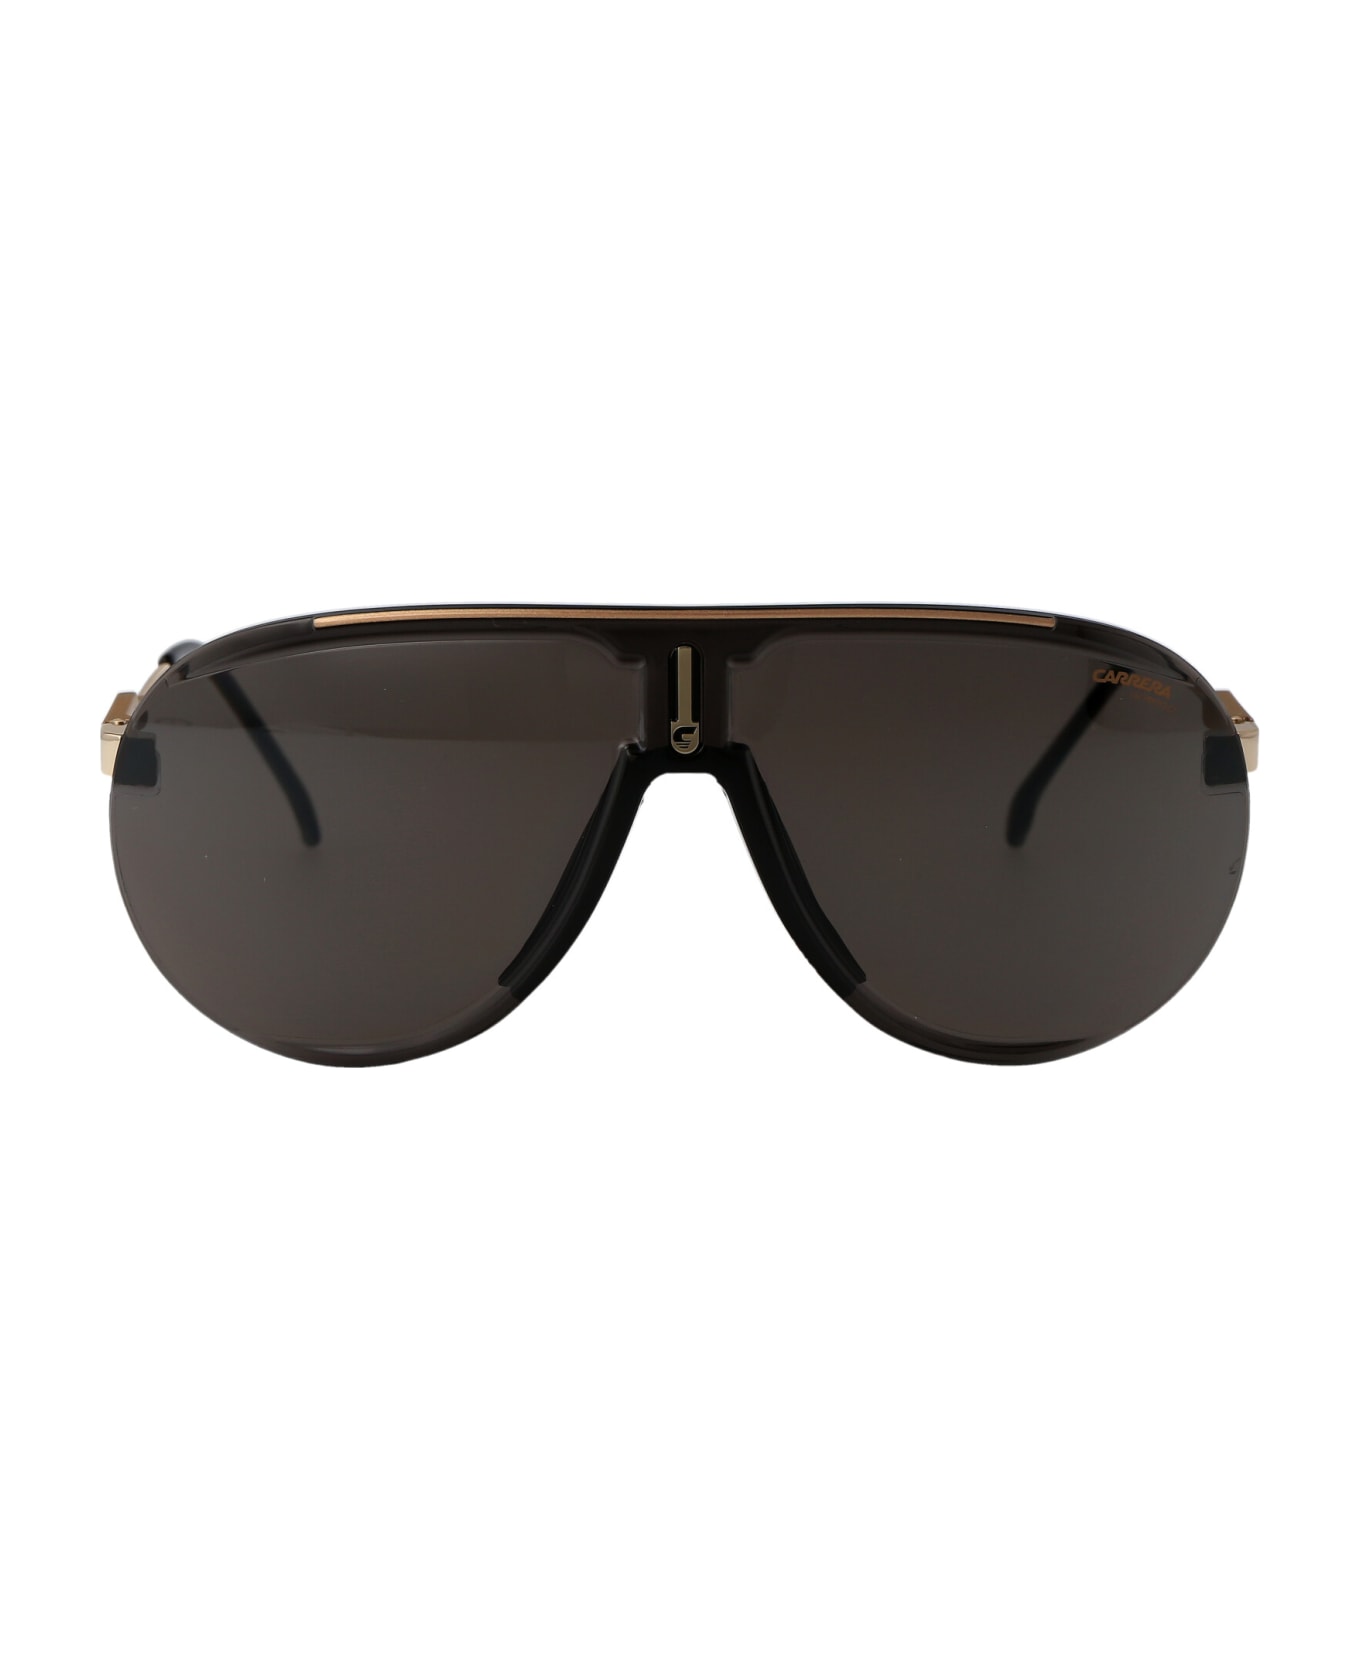 Carrera Superchampion Sunglasses - 2M22K BLACK GOLD サングラス